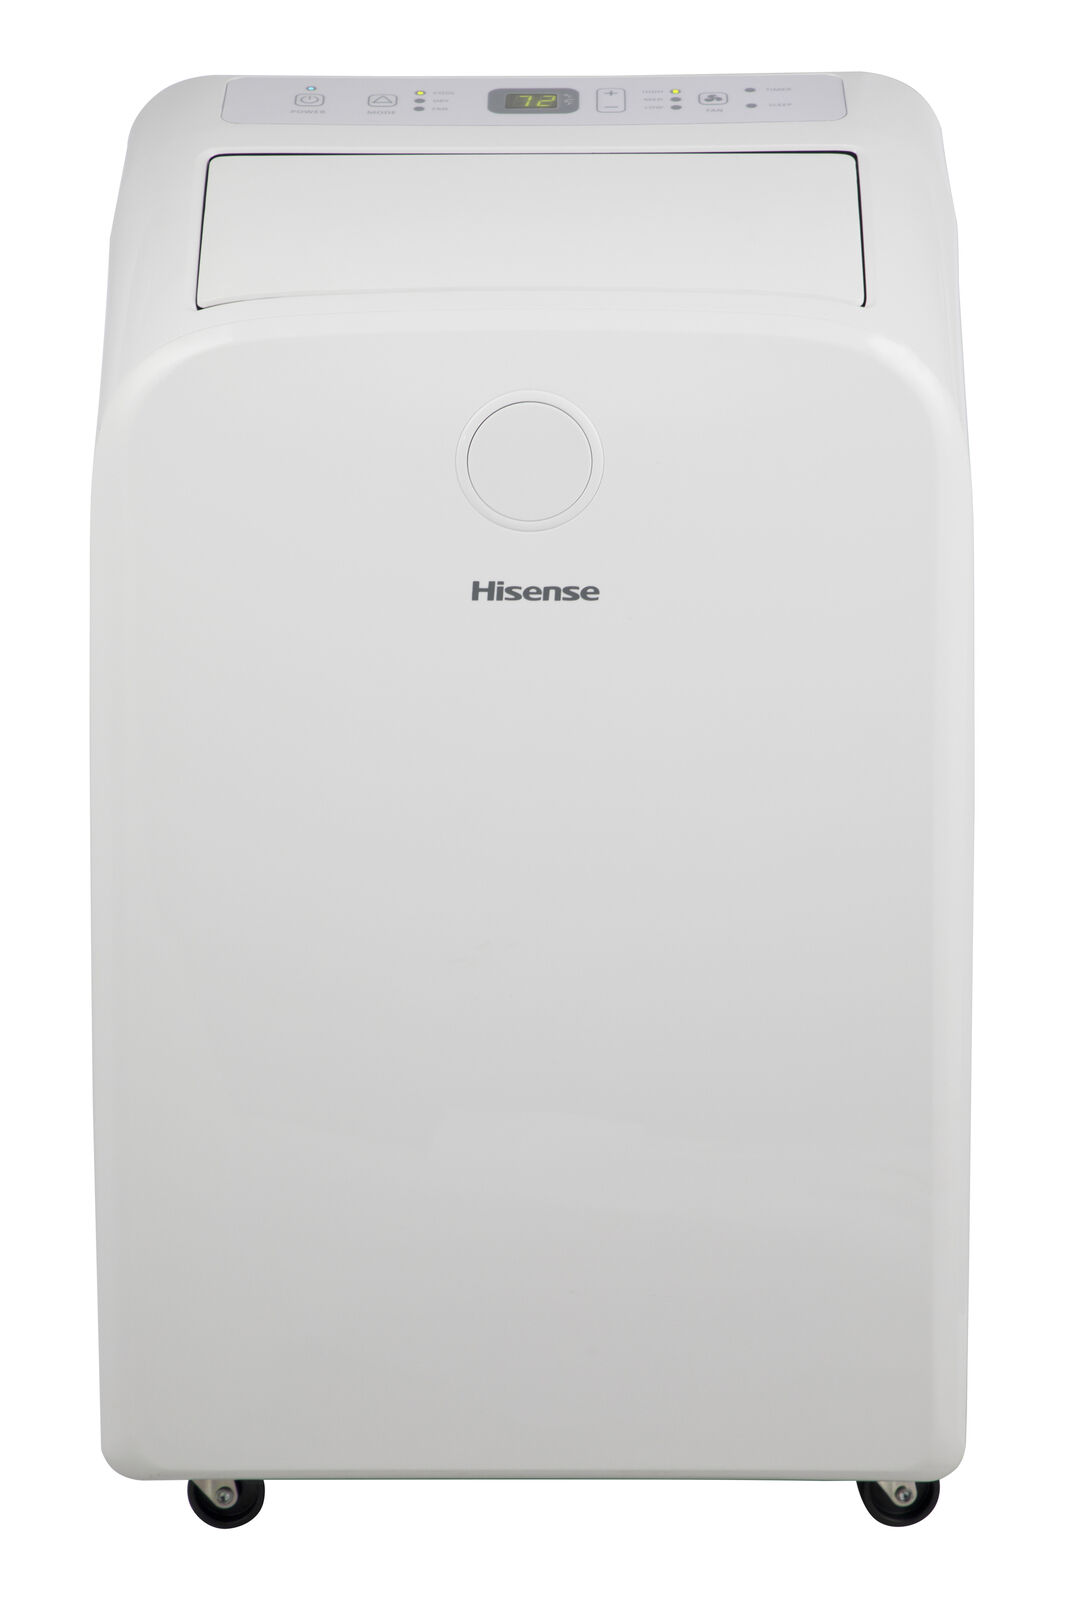 Hisense 400 Sq Ft Portable Air Conditioner With Remote Ap1219cr1w 819130023618 Ebay 8863